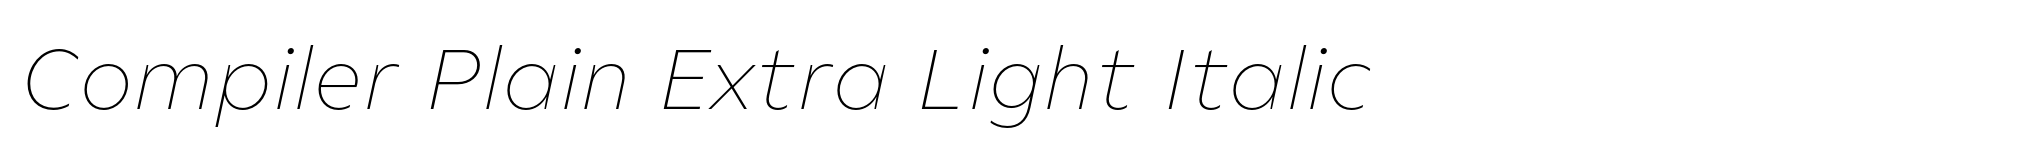 Compiler Plain Extra Light Italic image